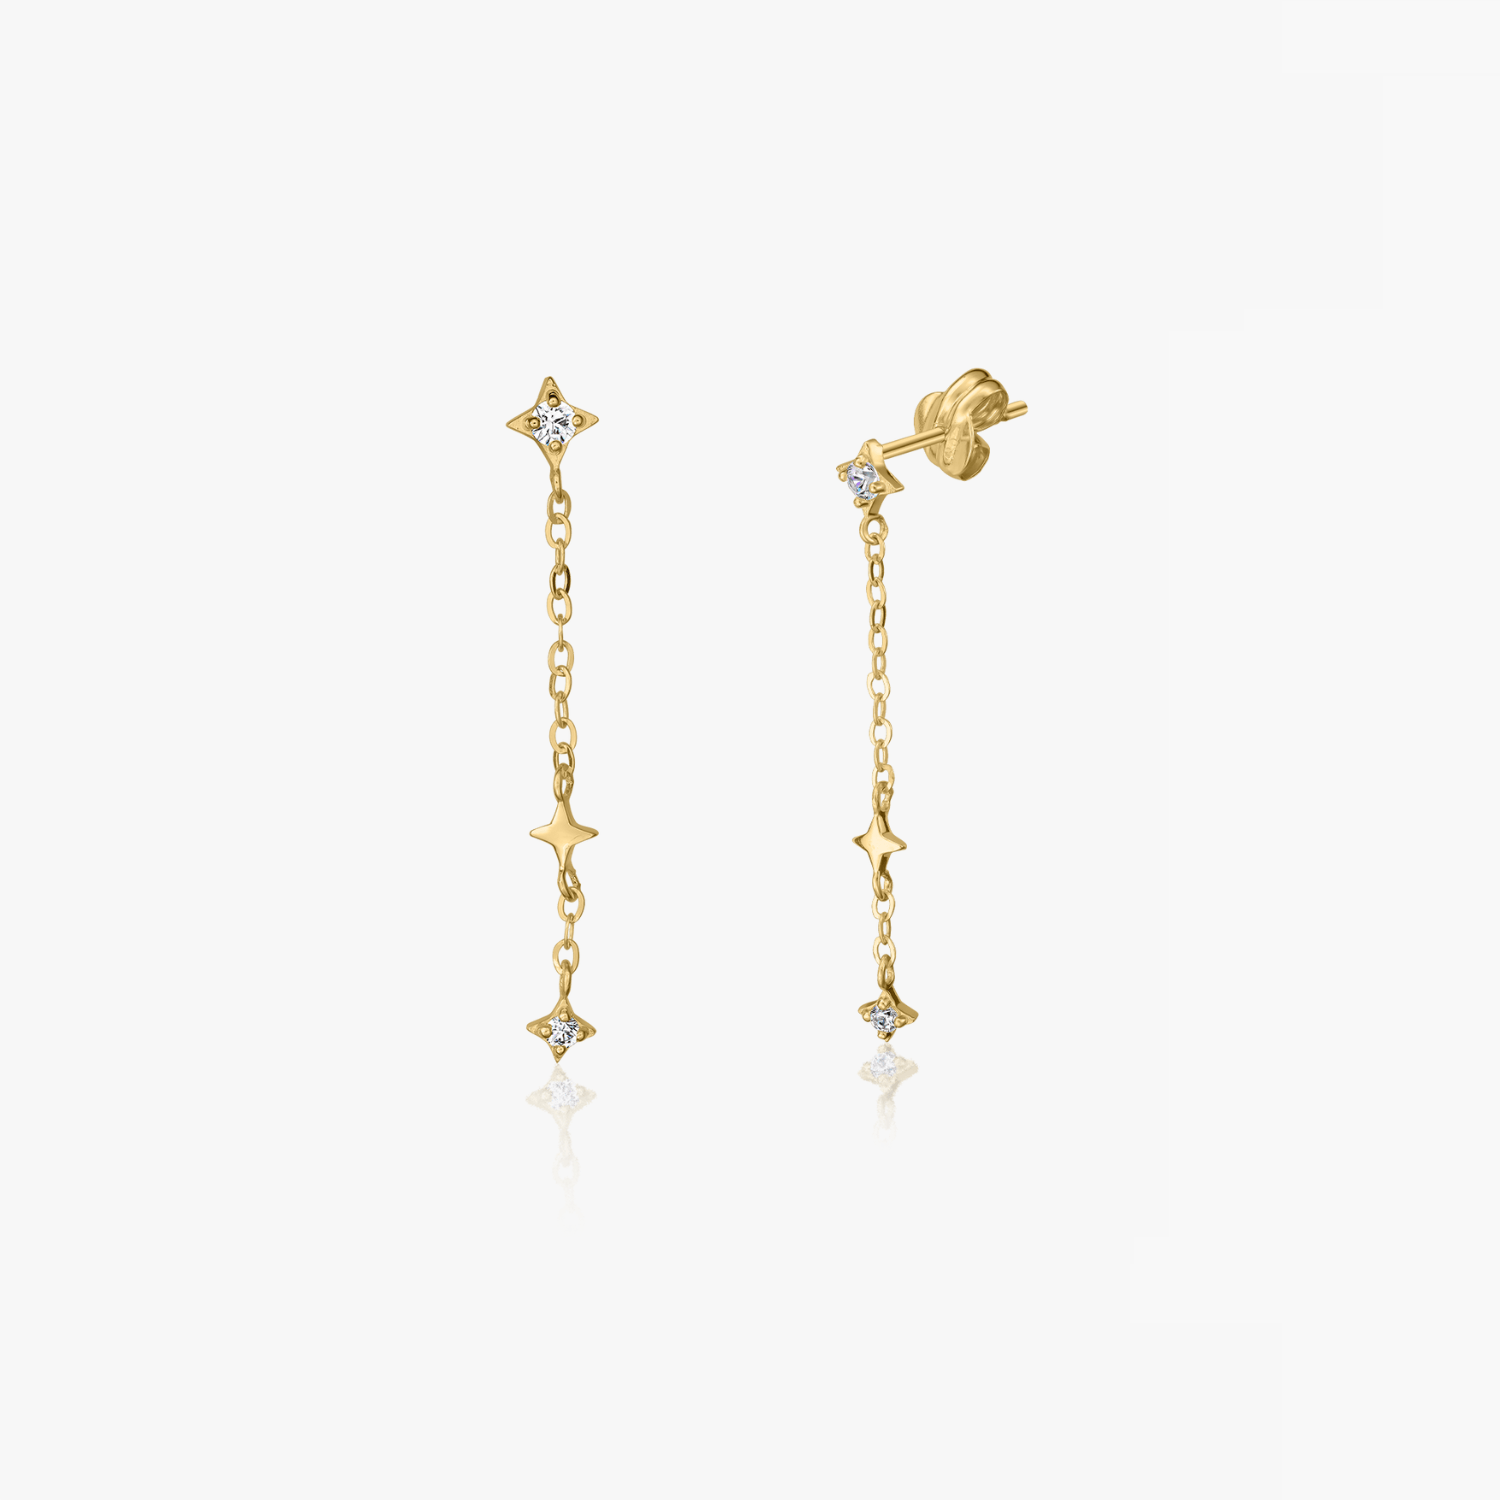 Make a wish gold earrings - Zirconium